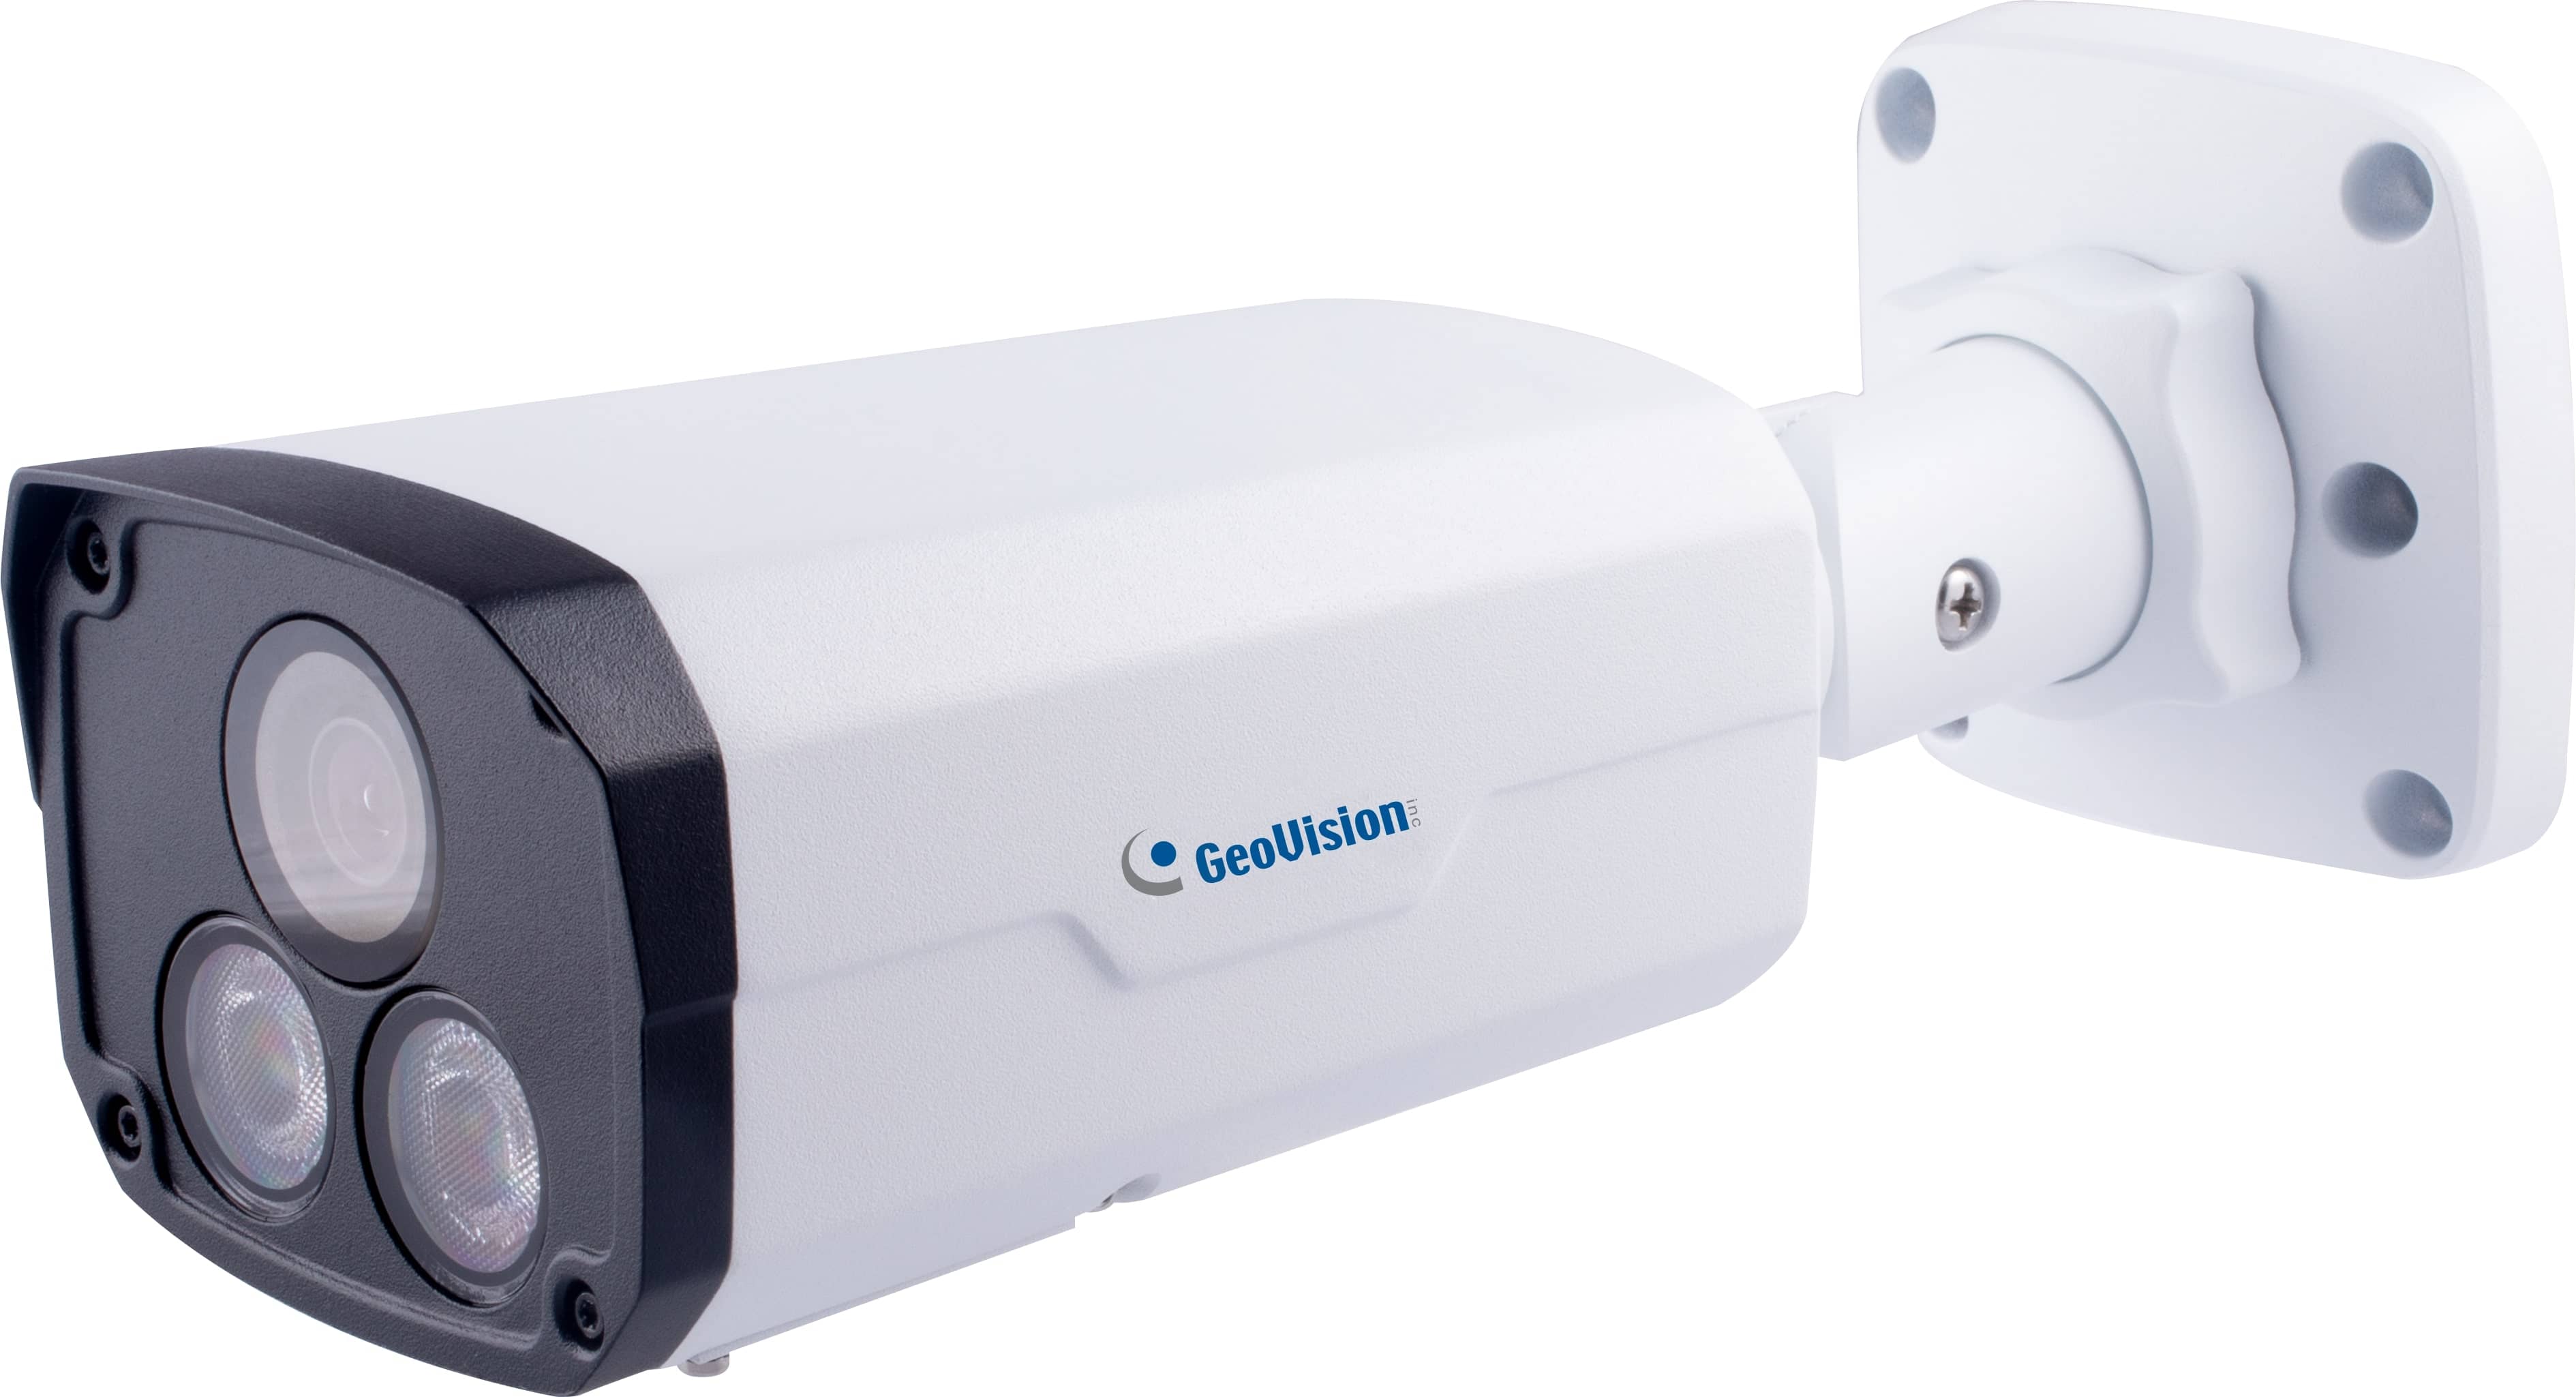 GV-BLFC5800 GeoVision Learning IP Camera